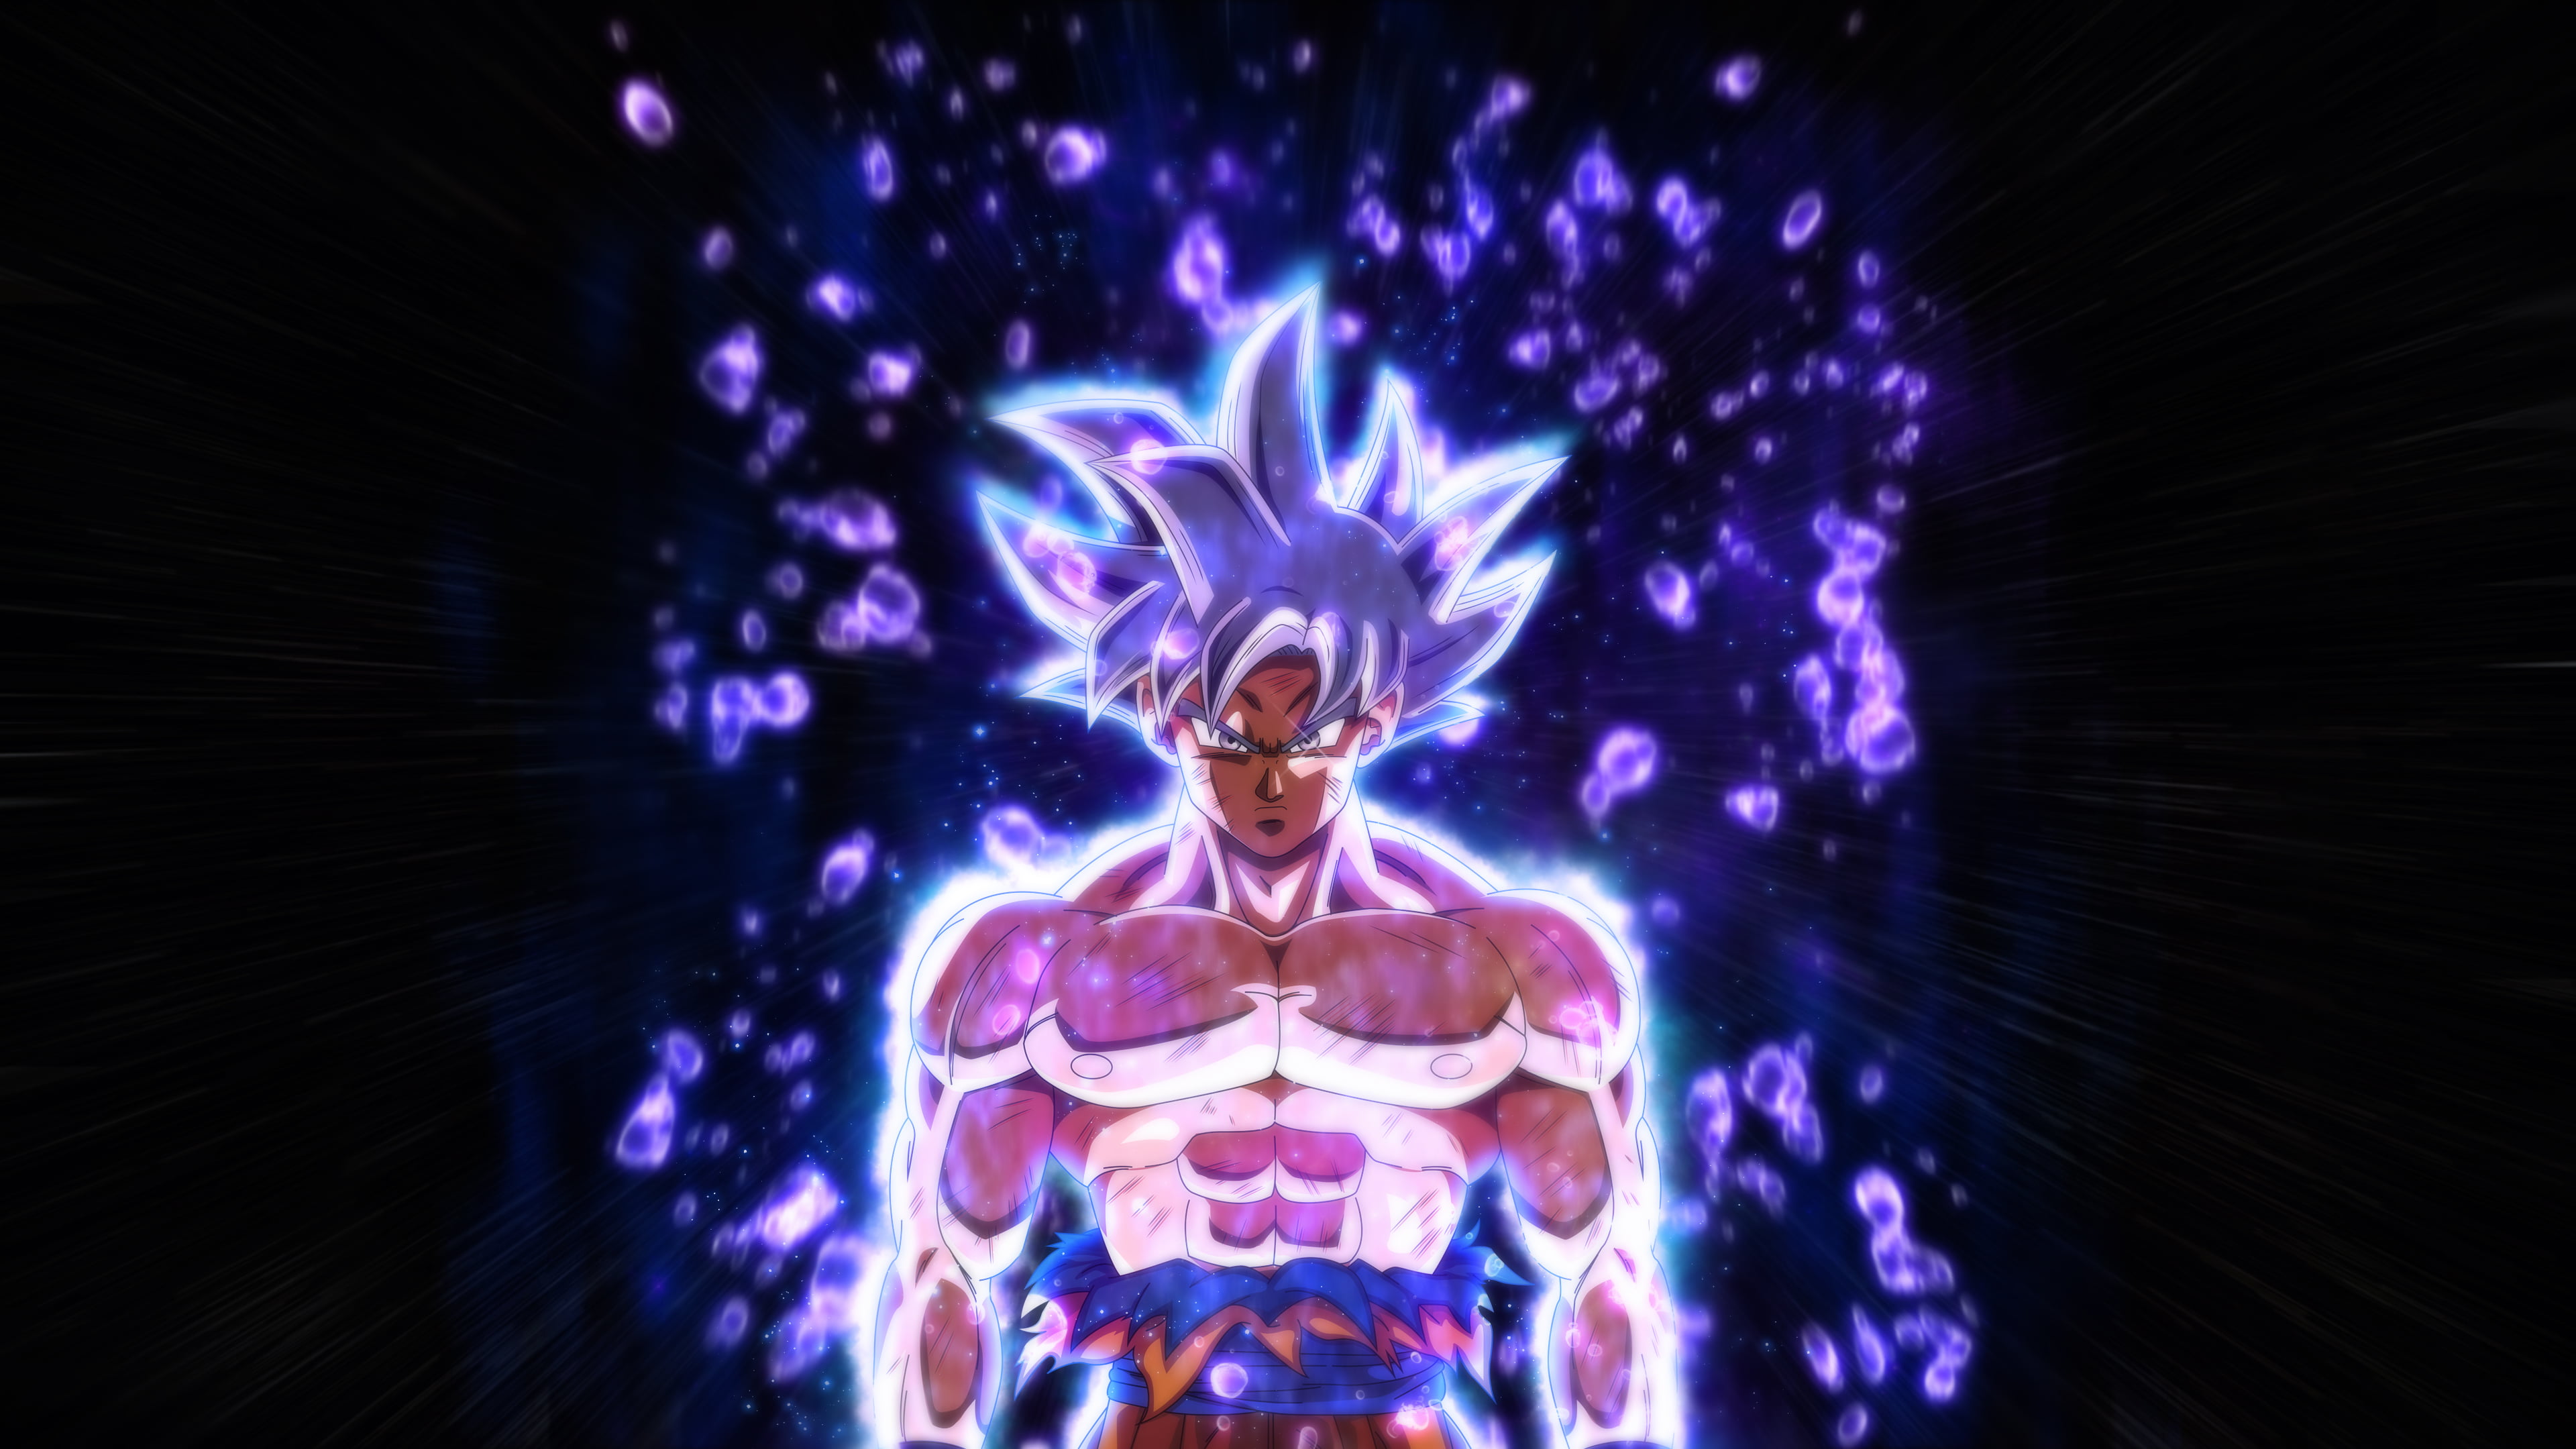 Hd Wallpaper Son Goku Ultra Instinct Mastered Ultra